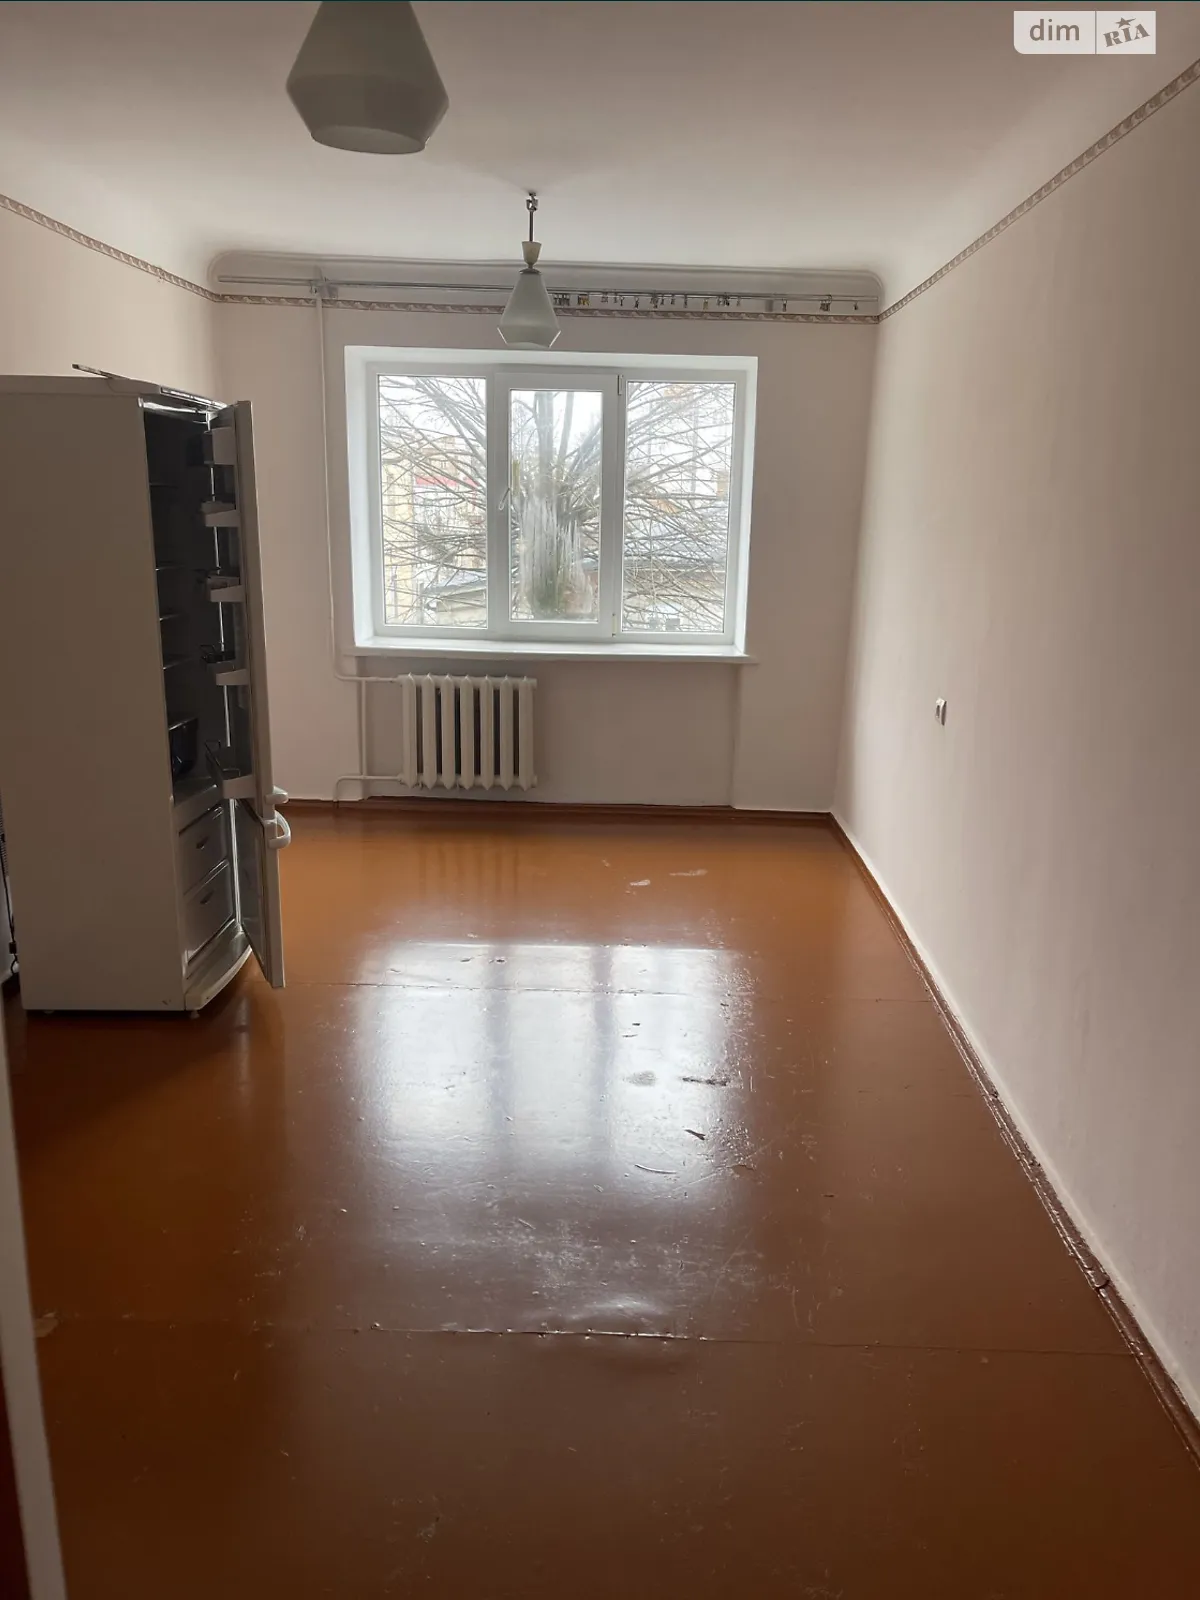 Продается комната 18 кв. м в Ровно - фото 2